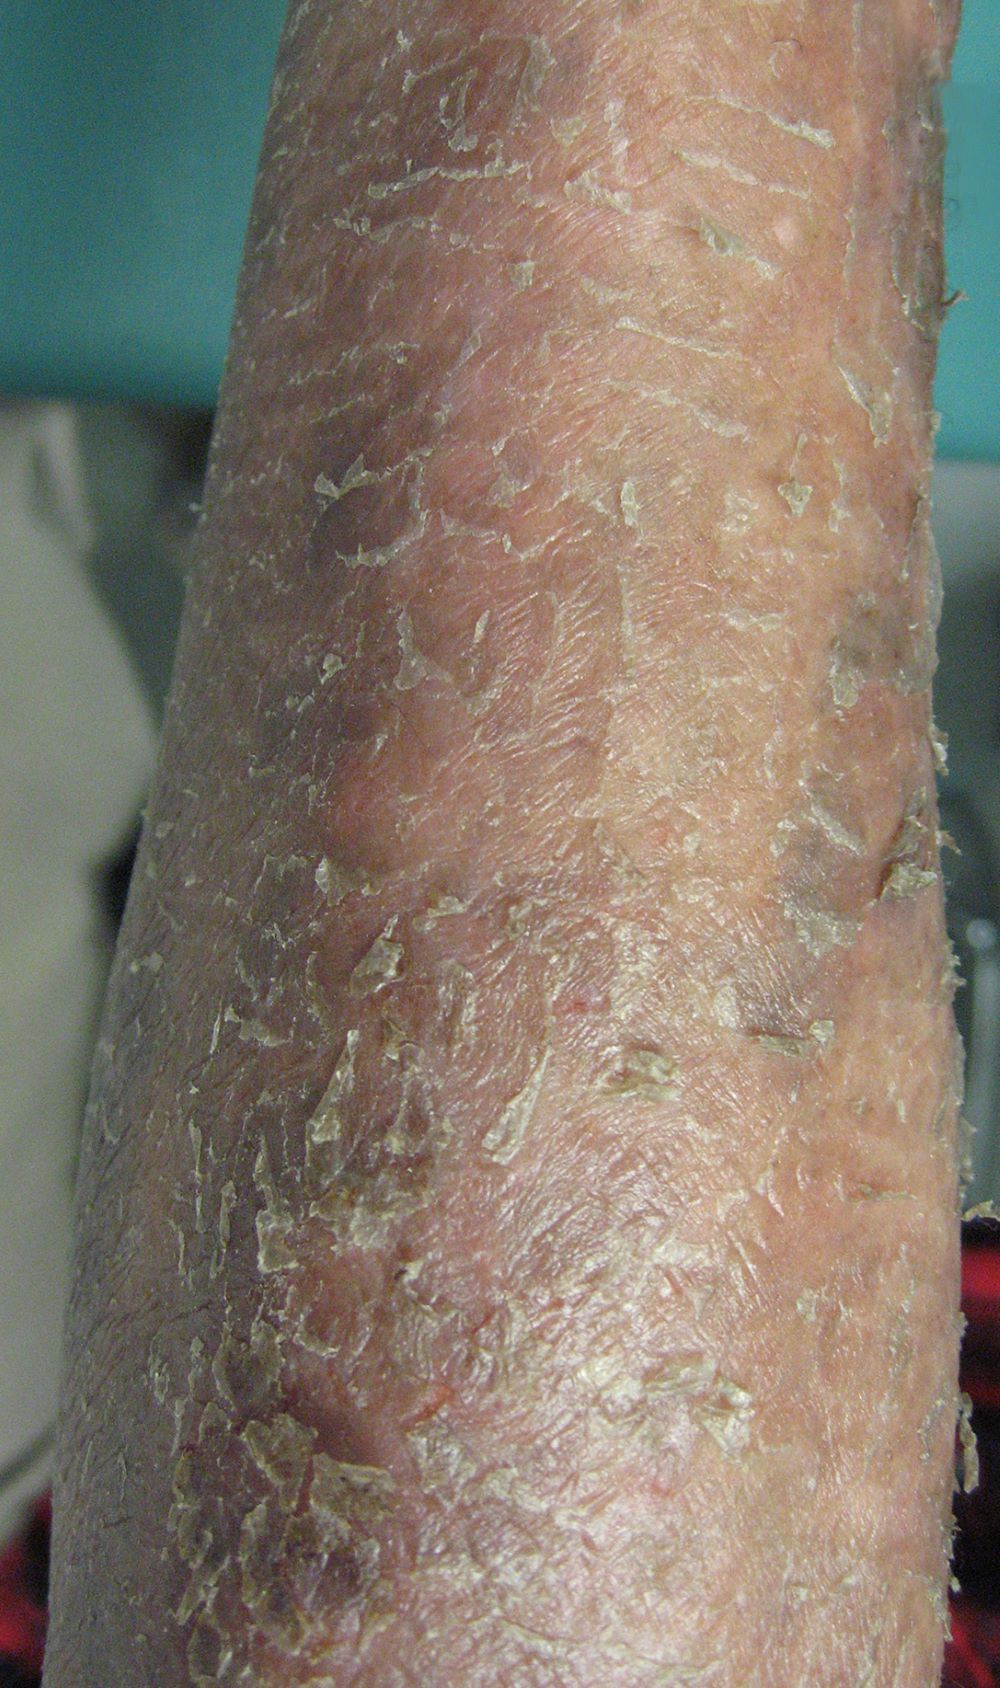 Prominent exfoliative lesion